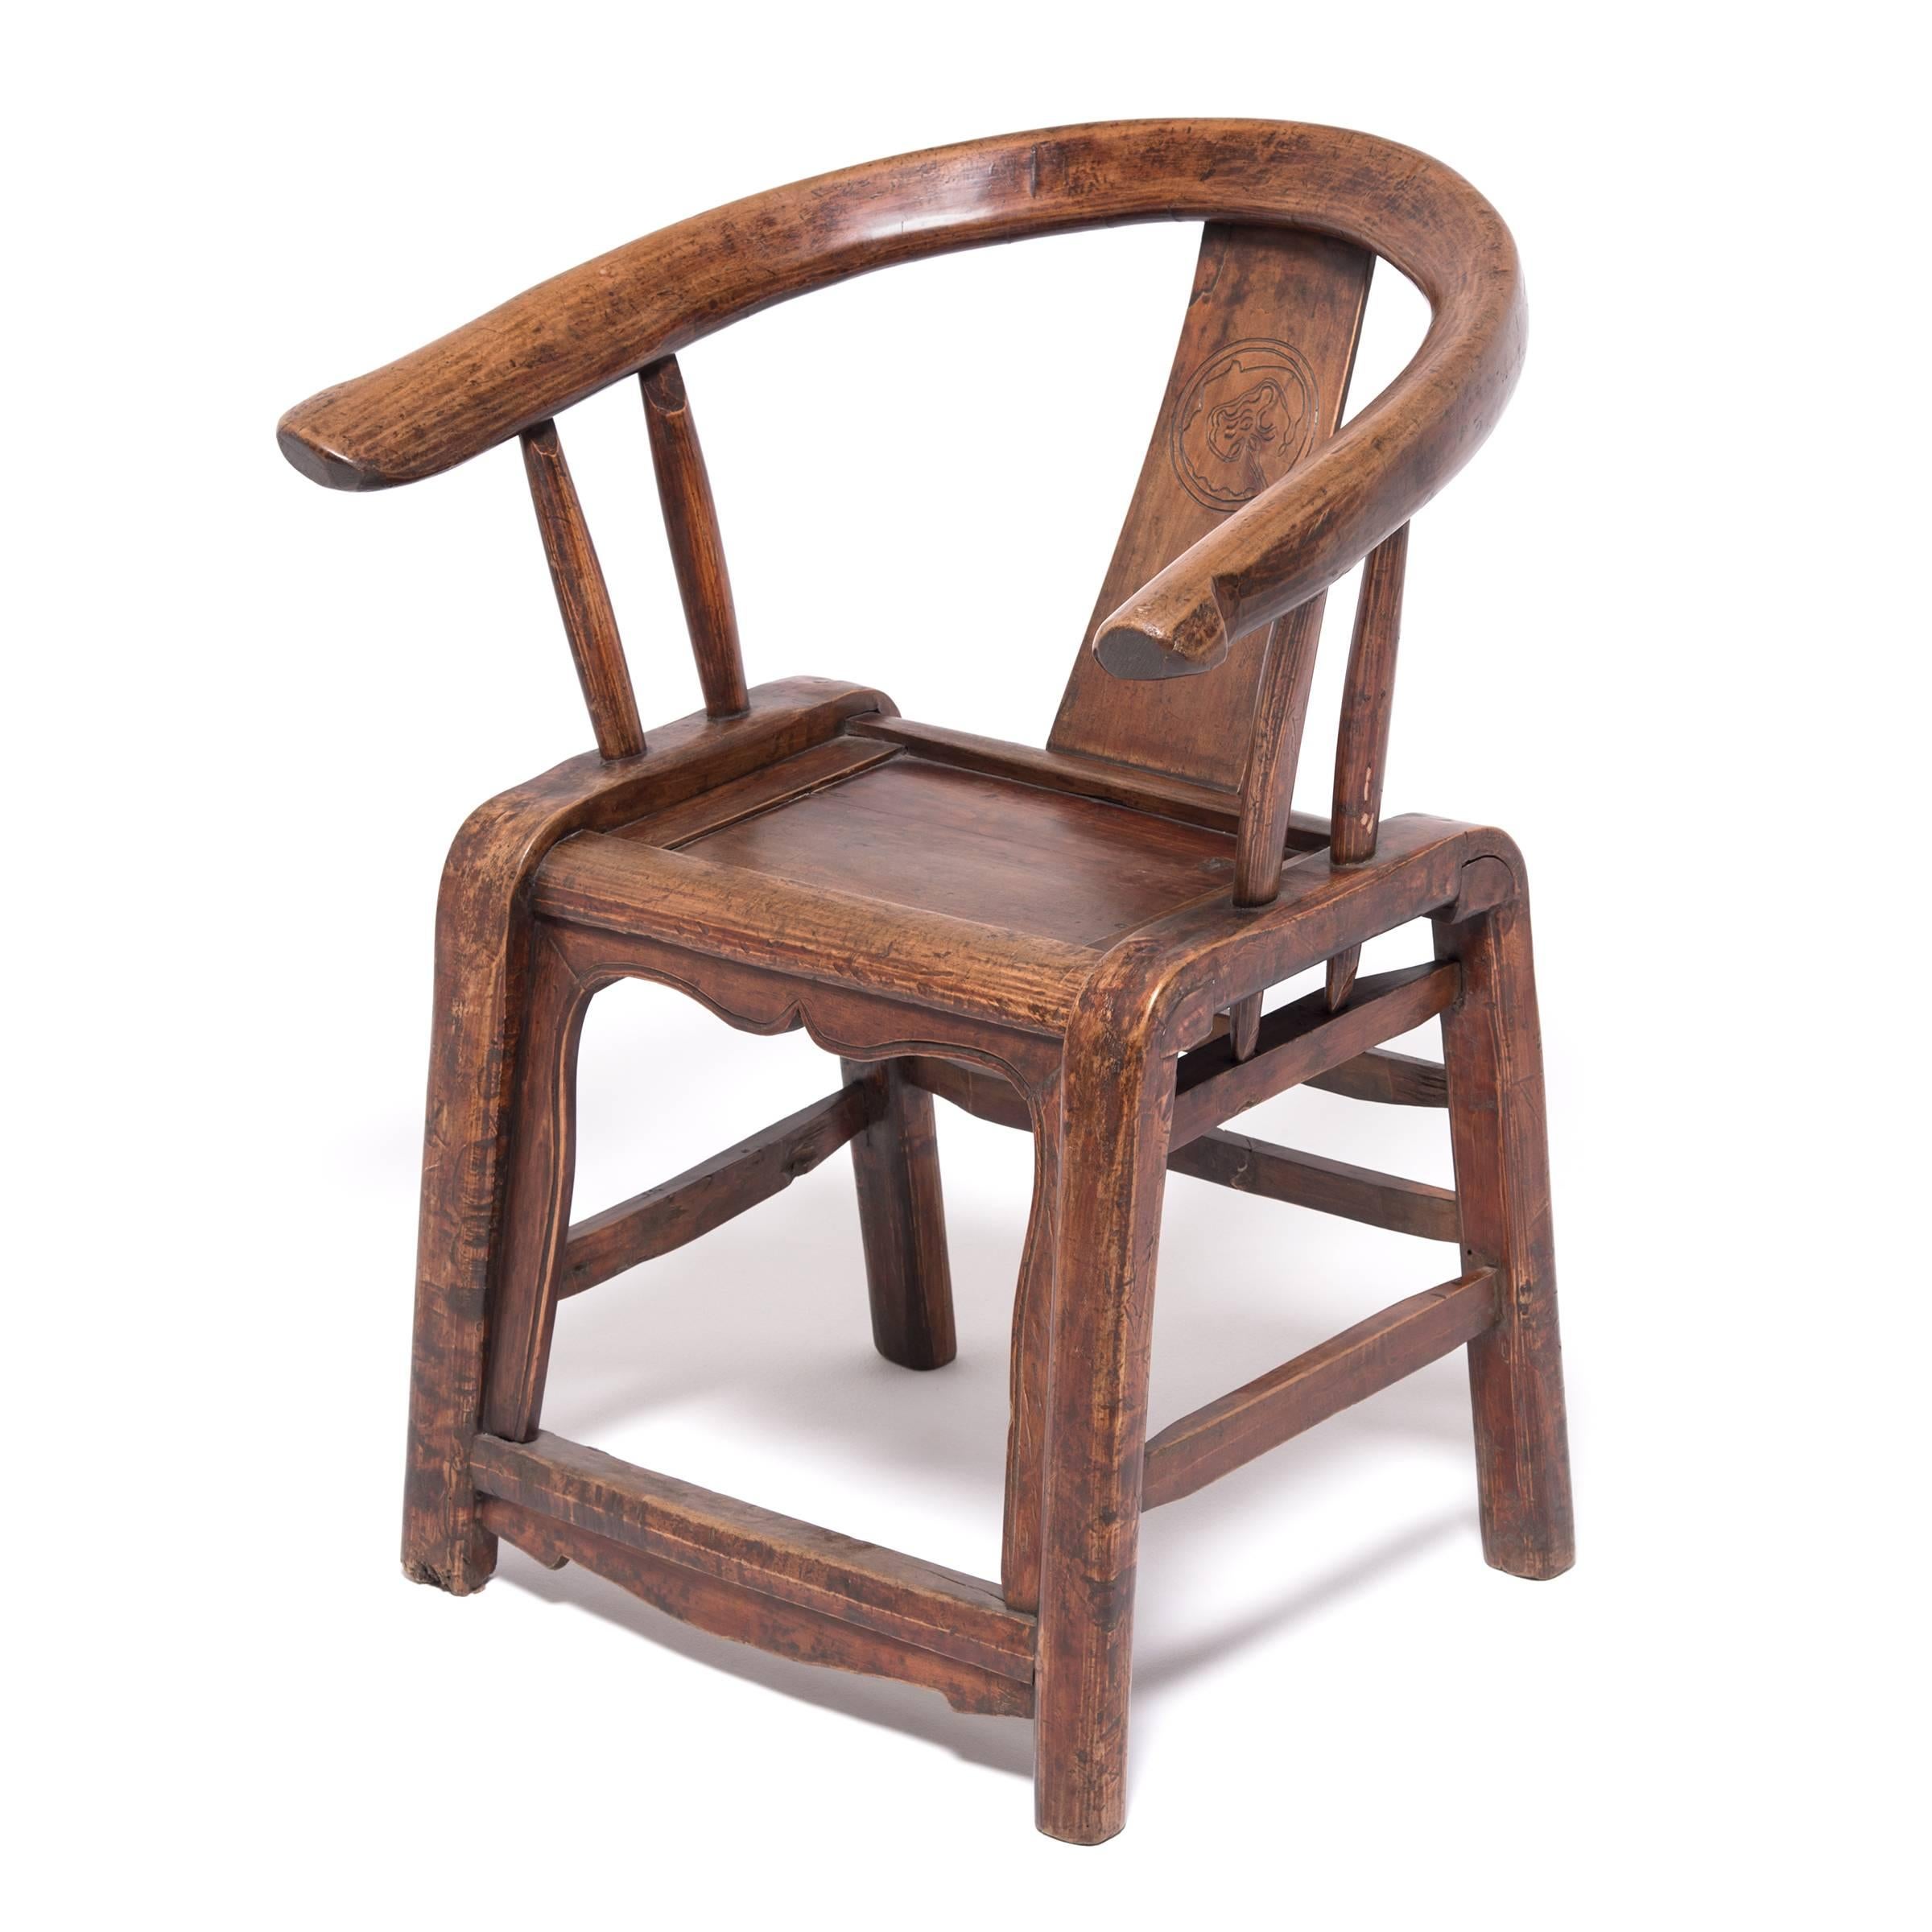 Qing Chinese Provincial Roundback Chair, circa 1850